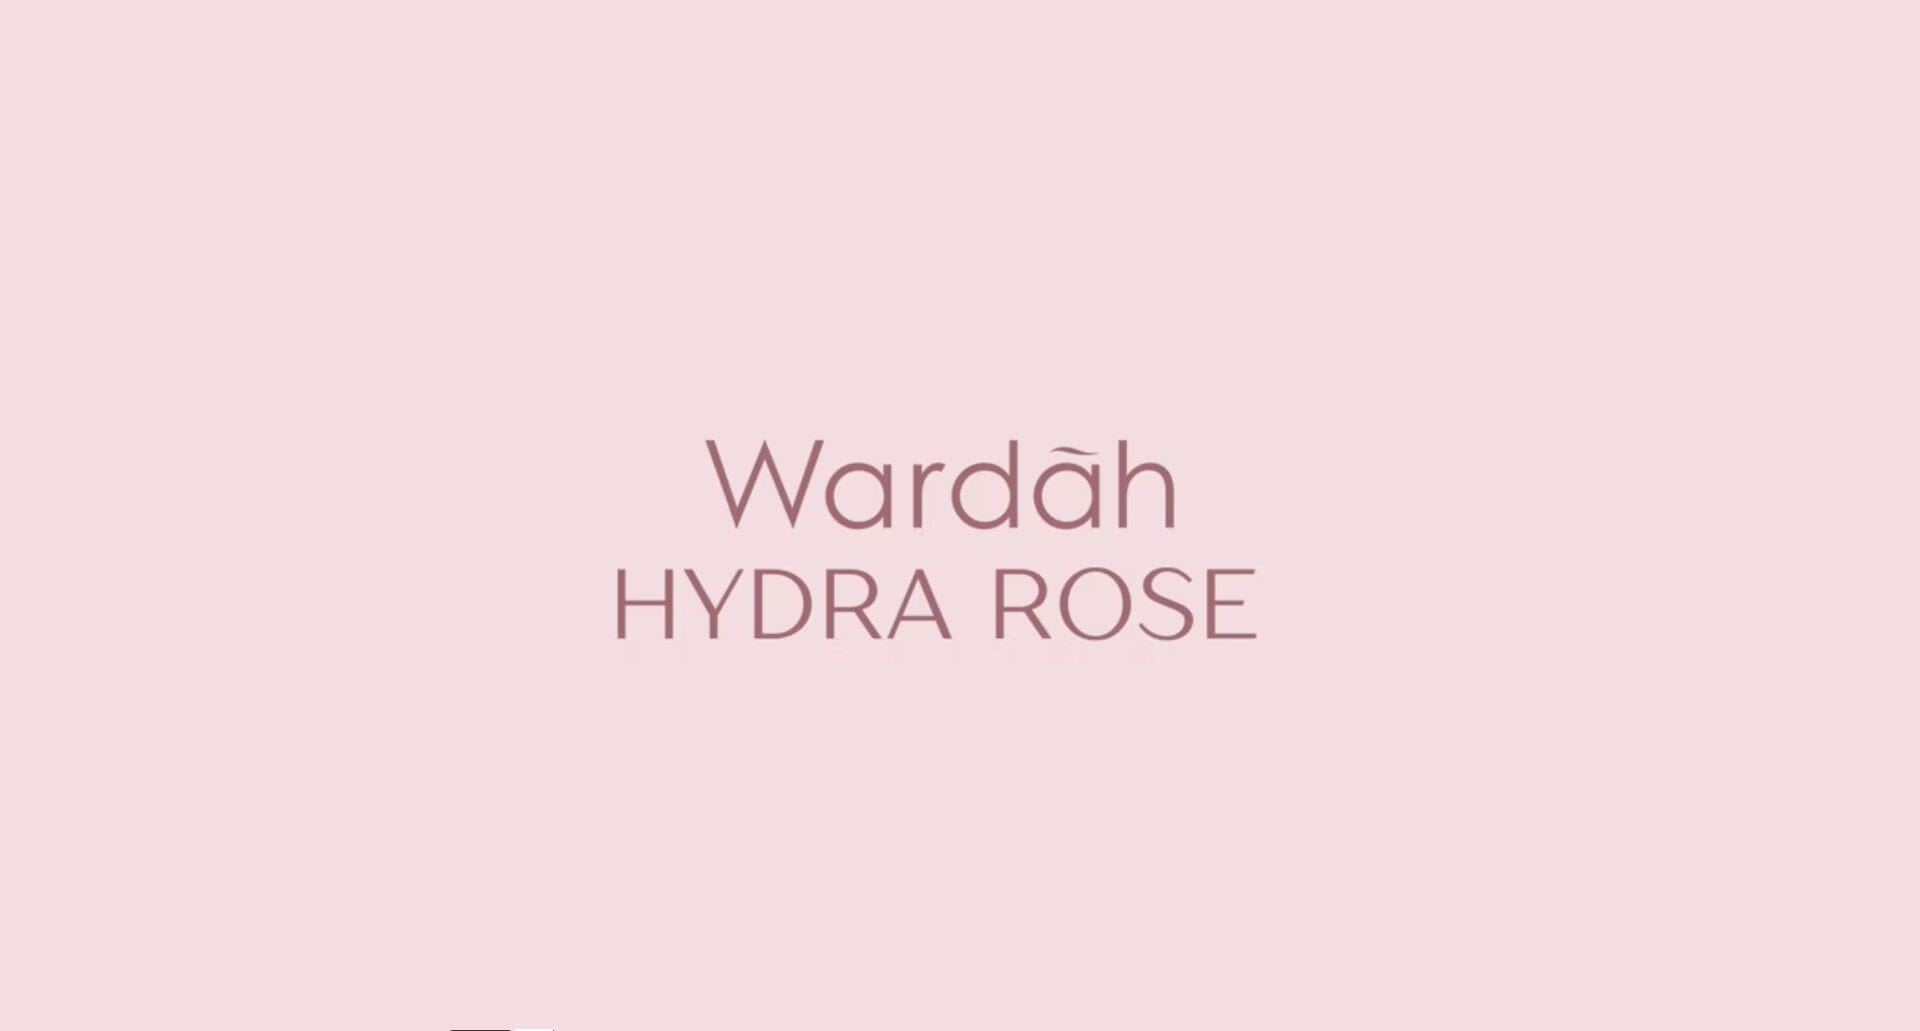 Wardah Hydra Rose – Commercial